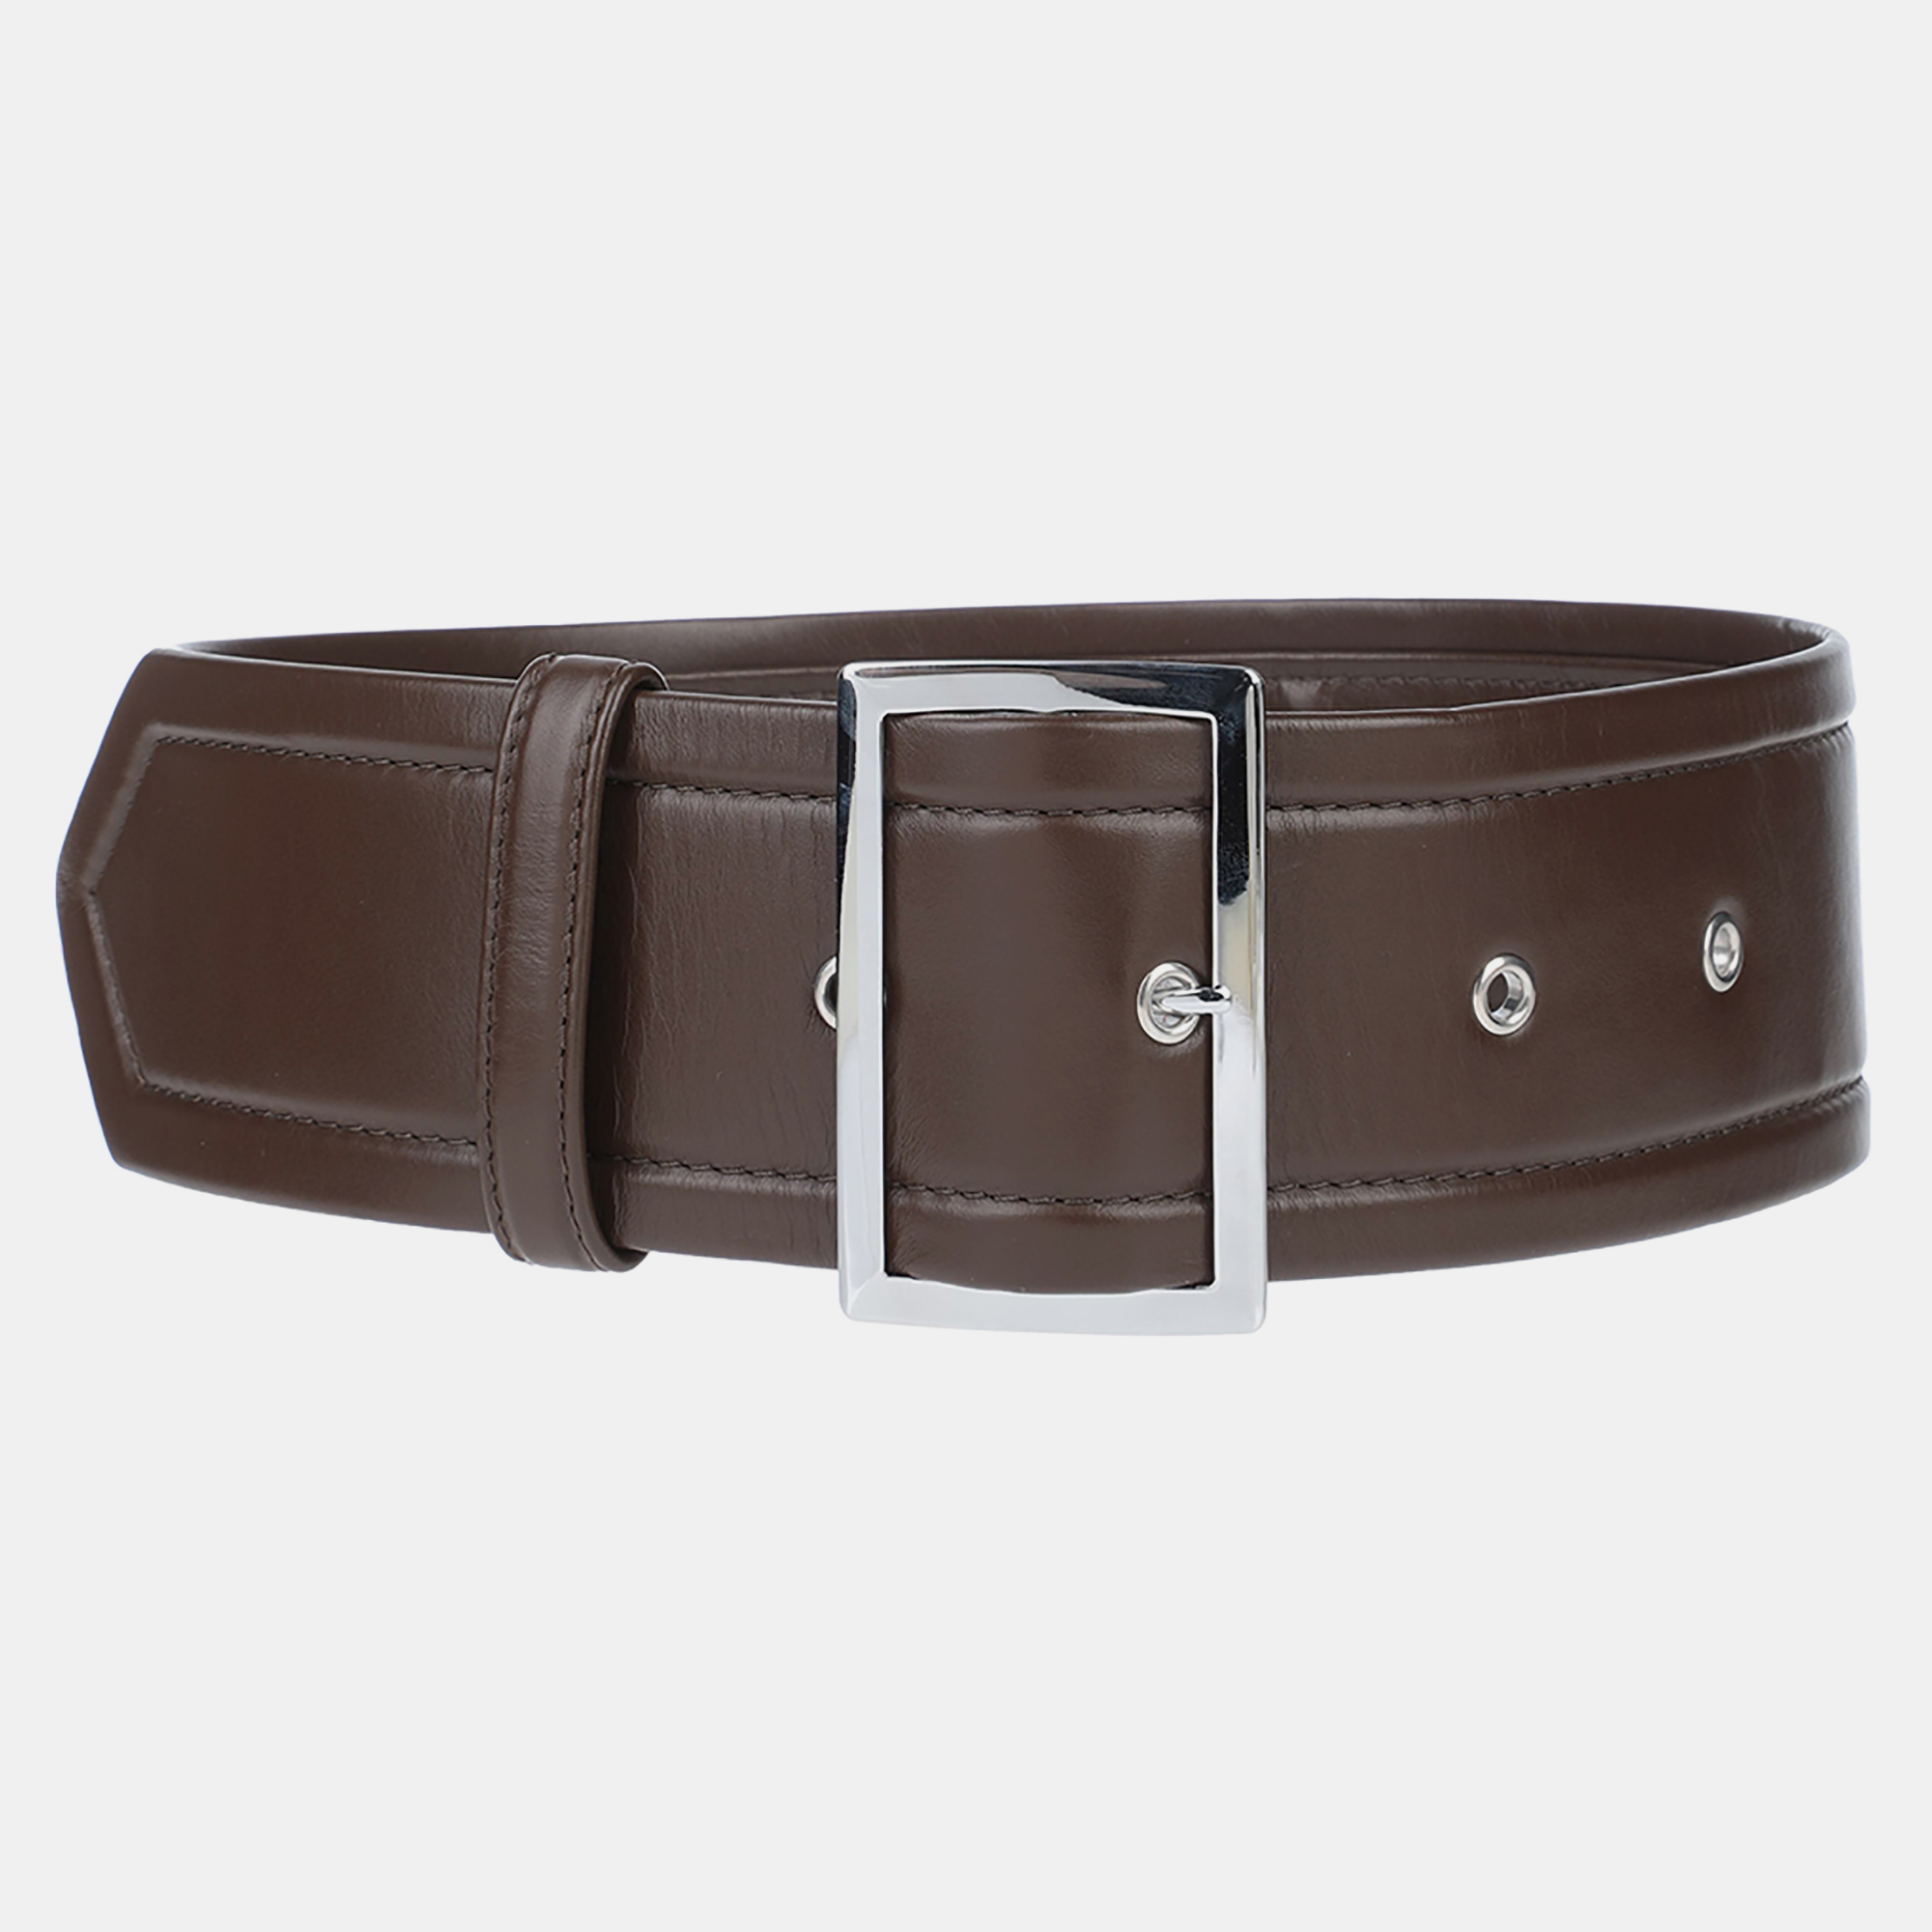 Marni brown leather waist wide belt 85cm